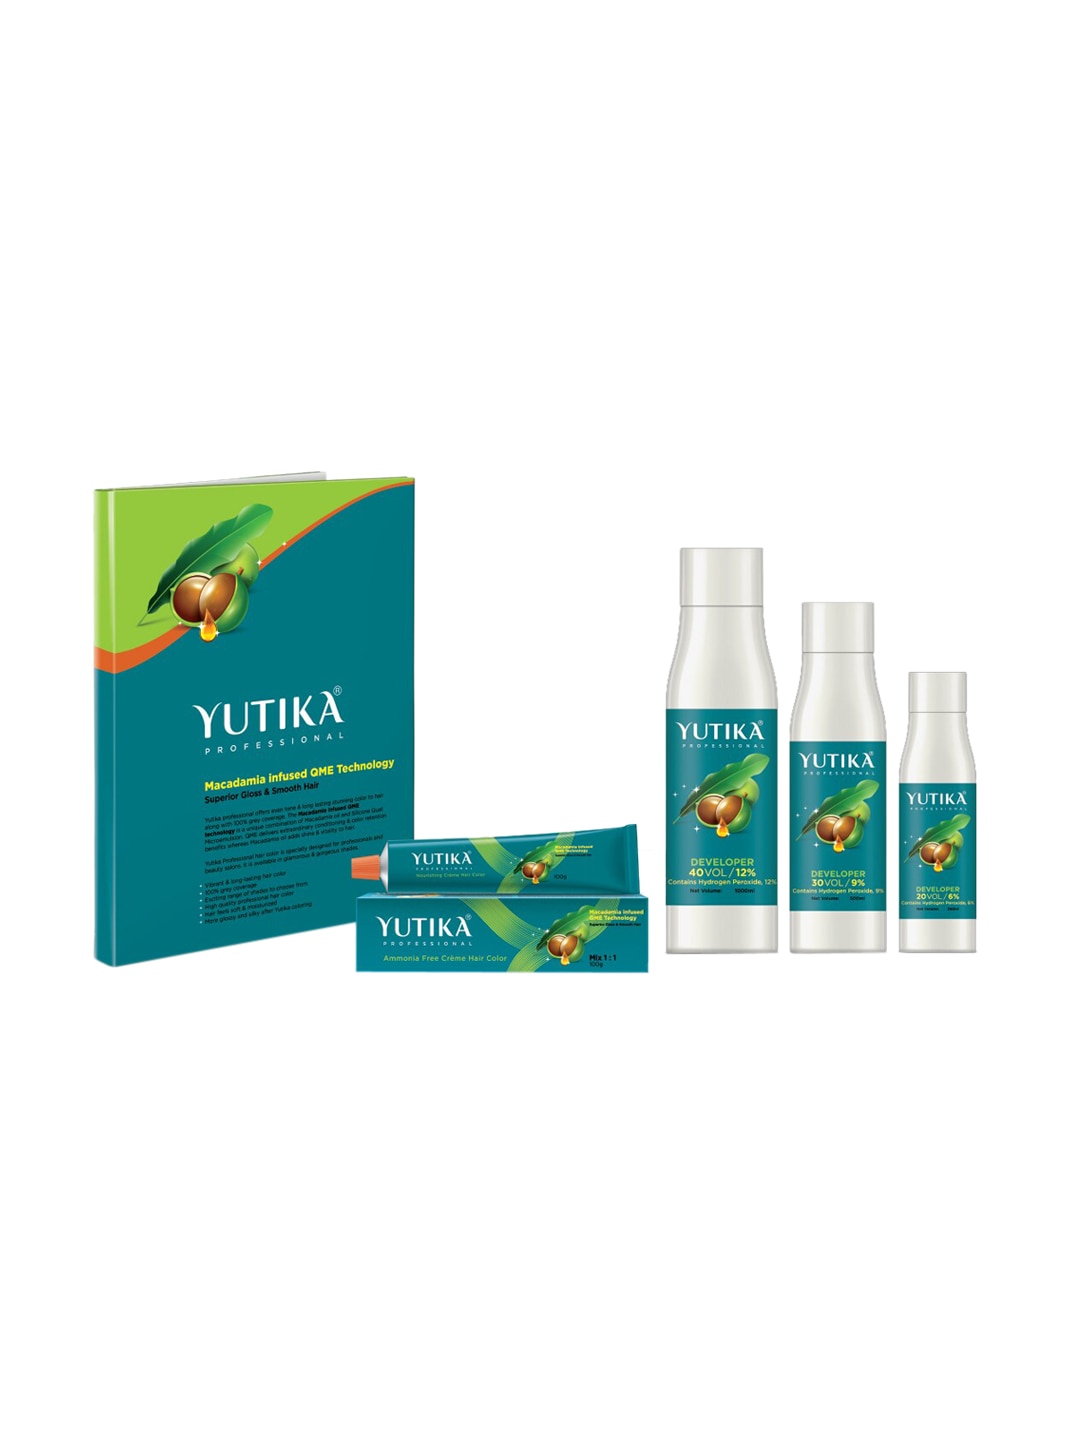 YUTIKA Professional Hair Developer 20 Volume 6%, 500ml Price in India